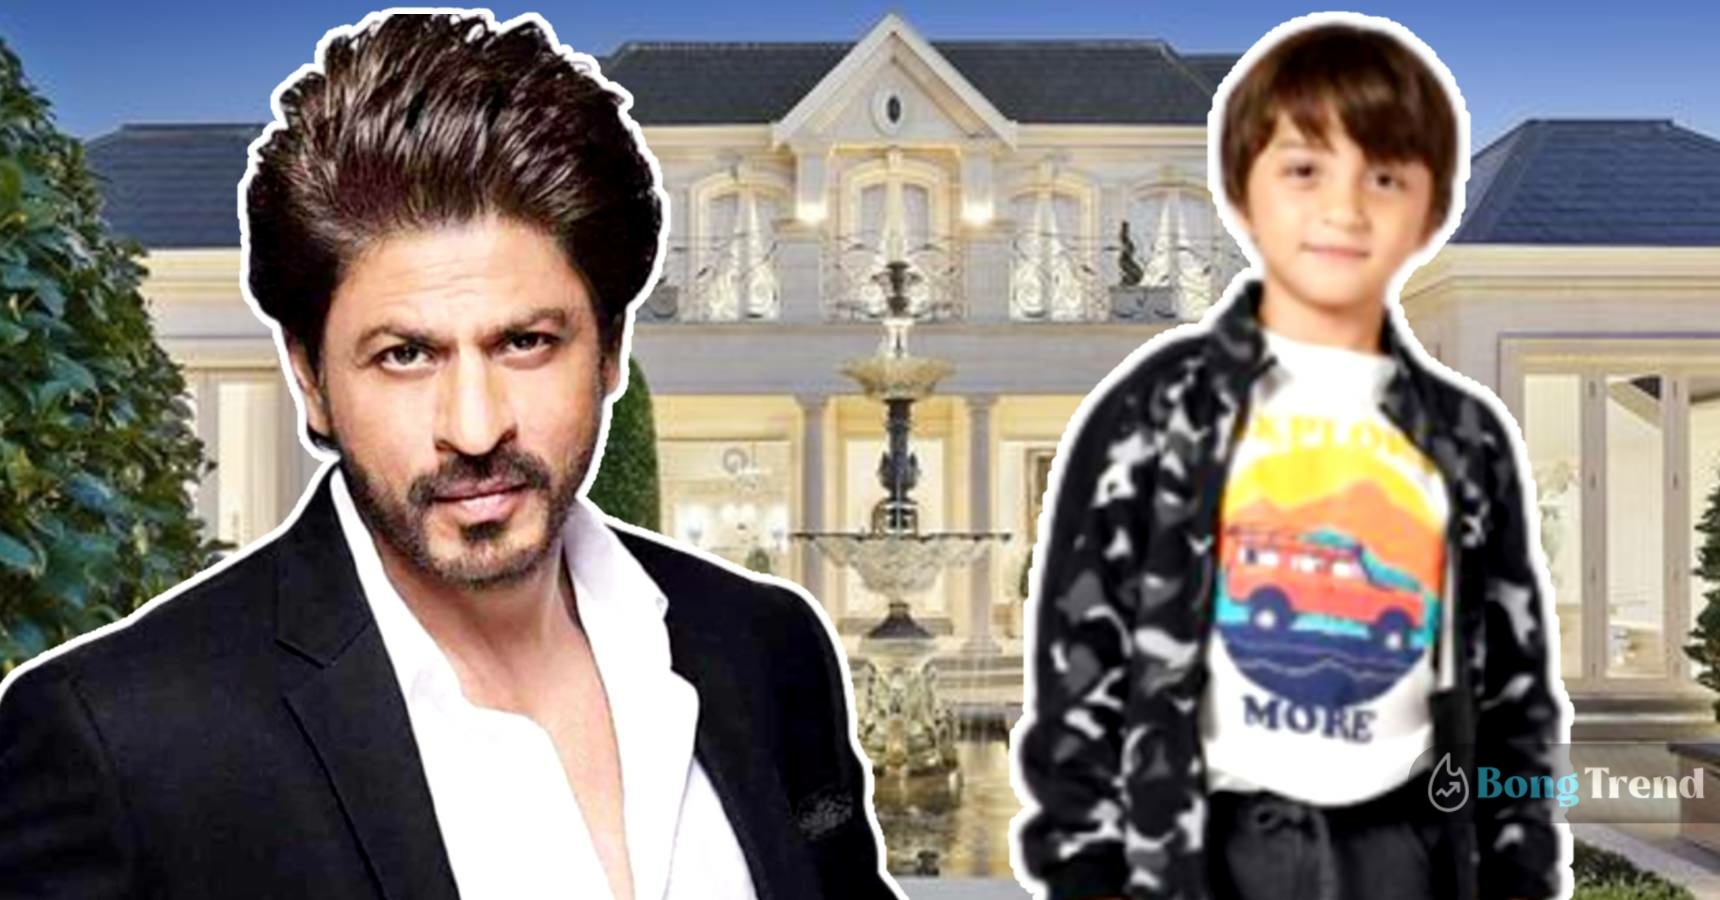 Take a look at the net worth of Bollywood superstar Shah Rukh Khan’s son AbRam Khan